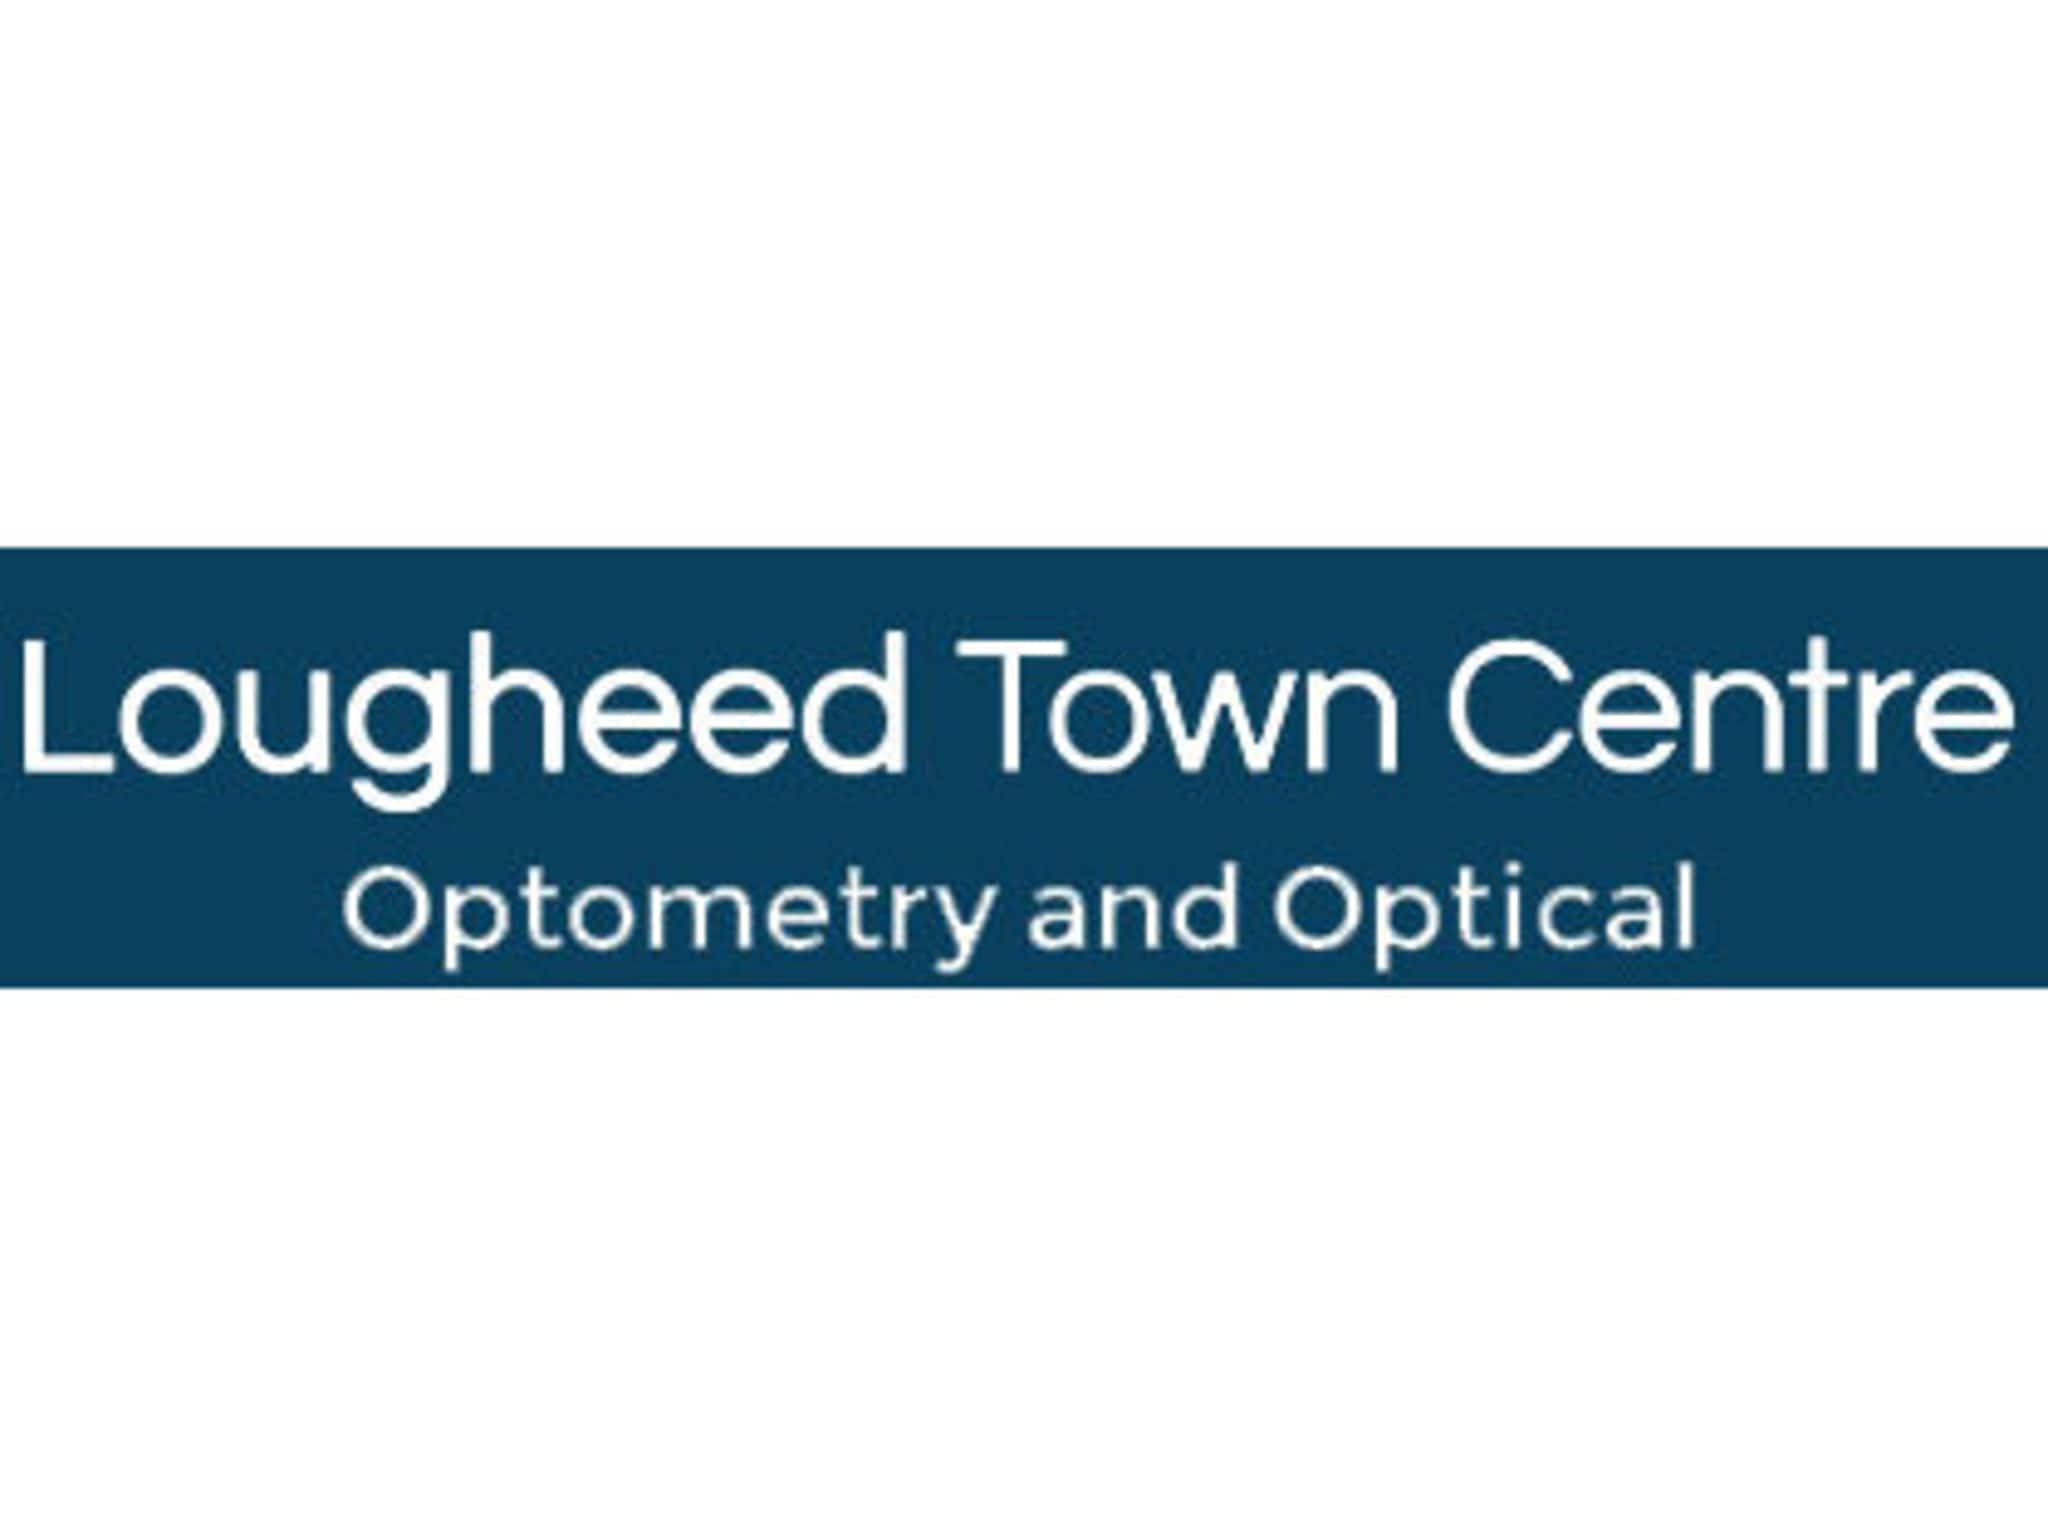 photo Lougheed Town Centre Optical & Optometry